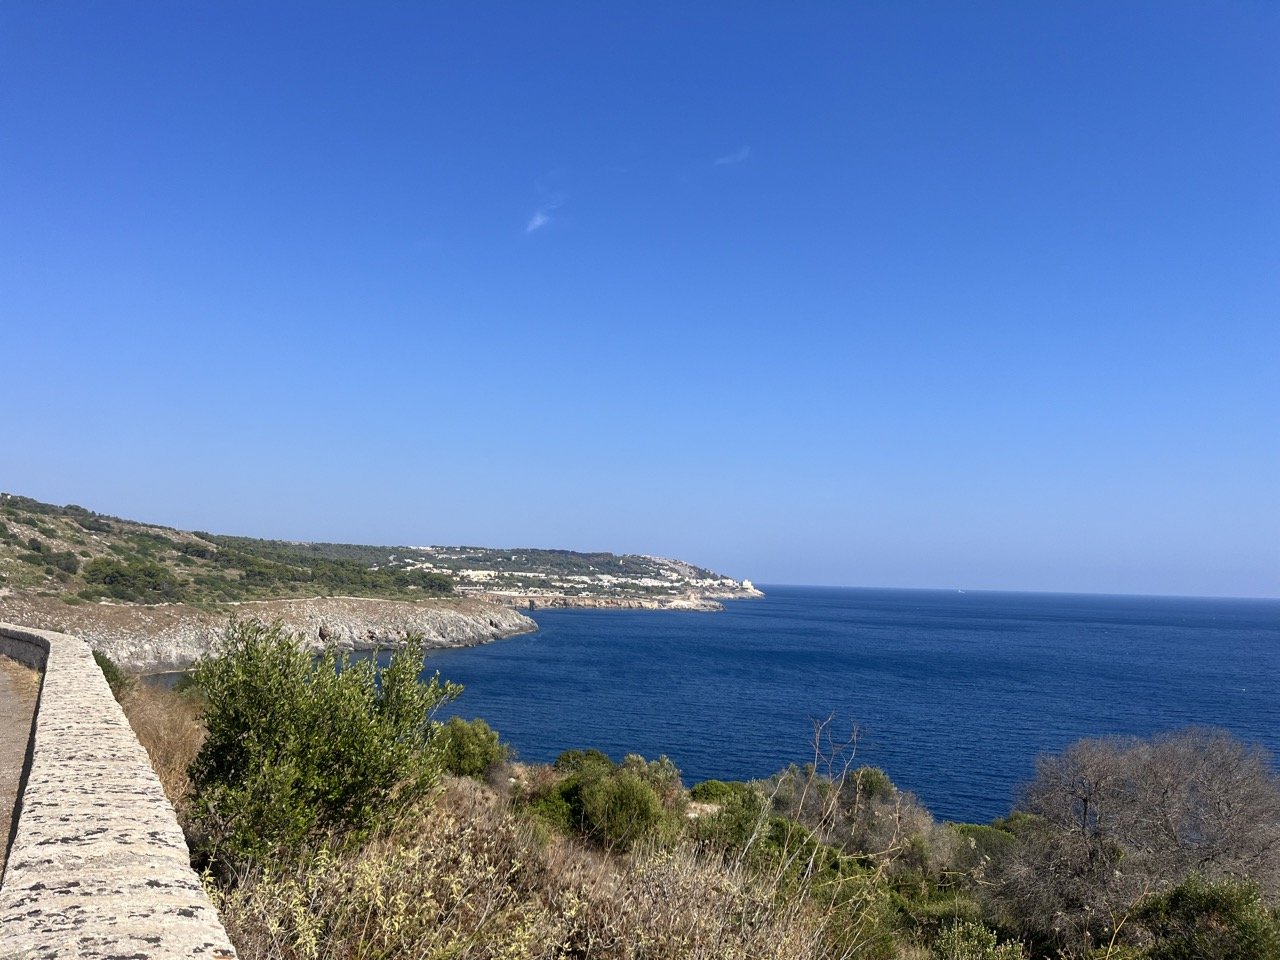 A stretch of rocky coastline with a deep blue sea on a sunny fall day in southern Salento, Puglia.